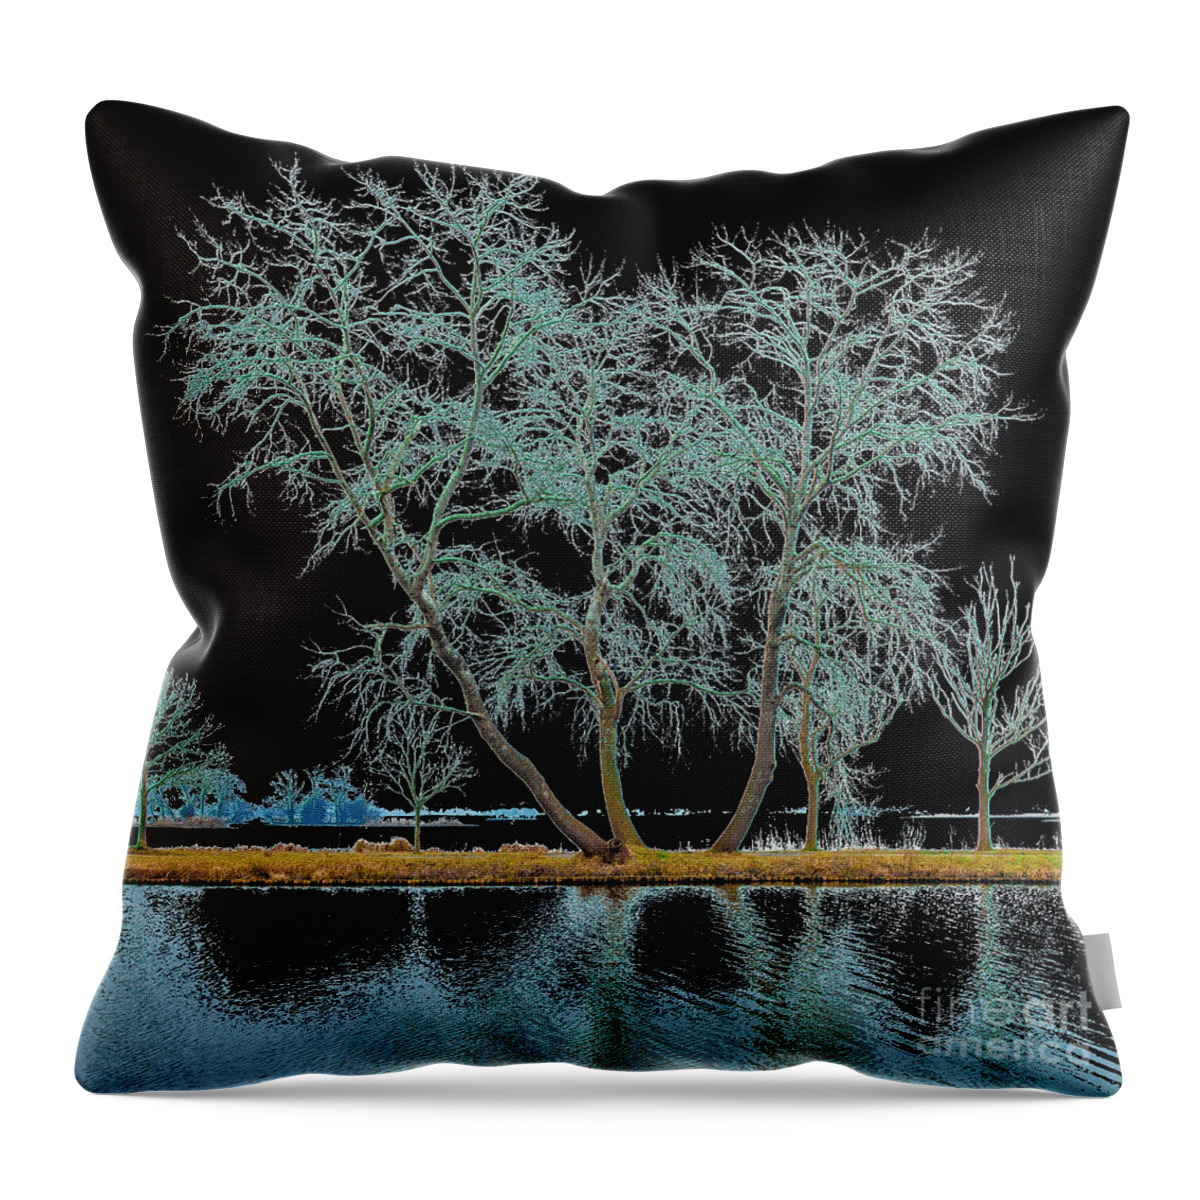 Elfhoevenplas Throw Pillow featuring the digital art Fairy tree-1 by Casper Cammeraat